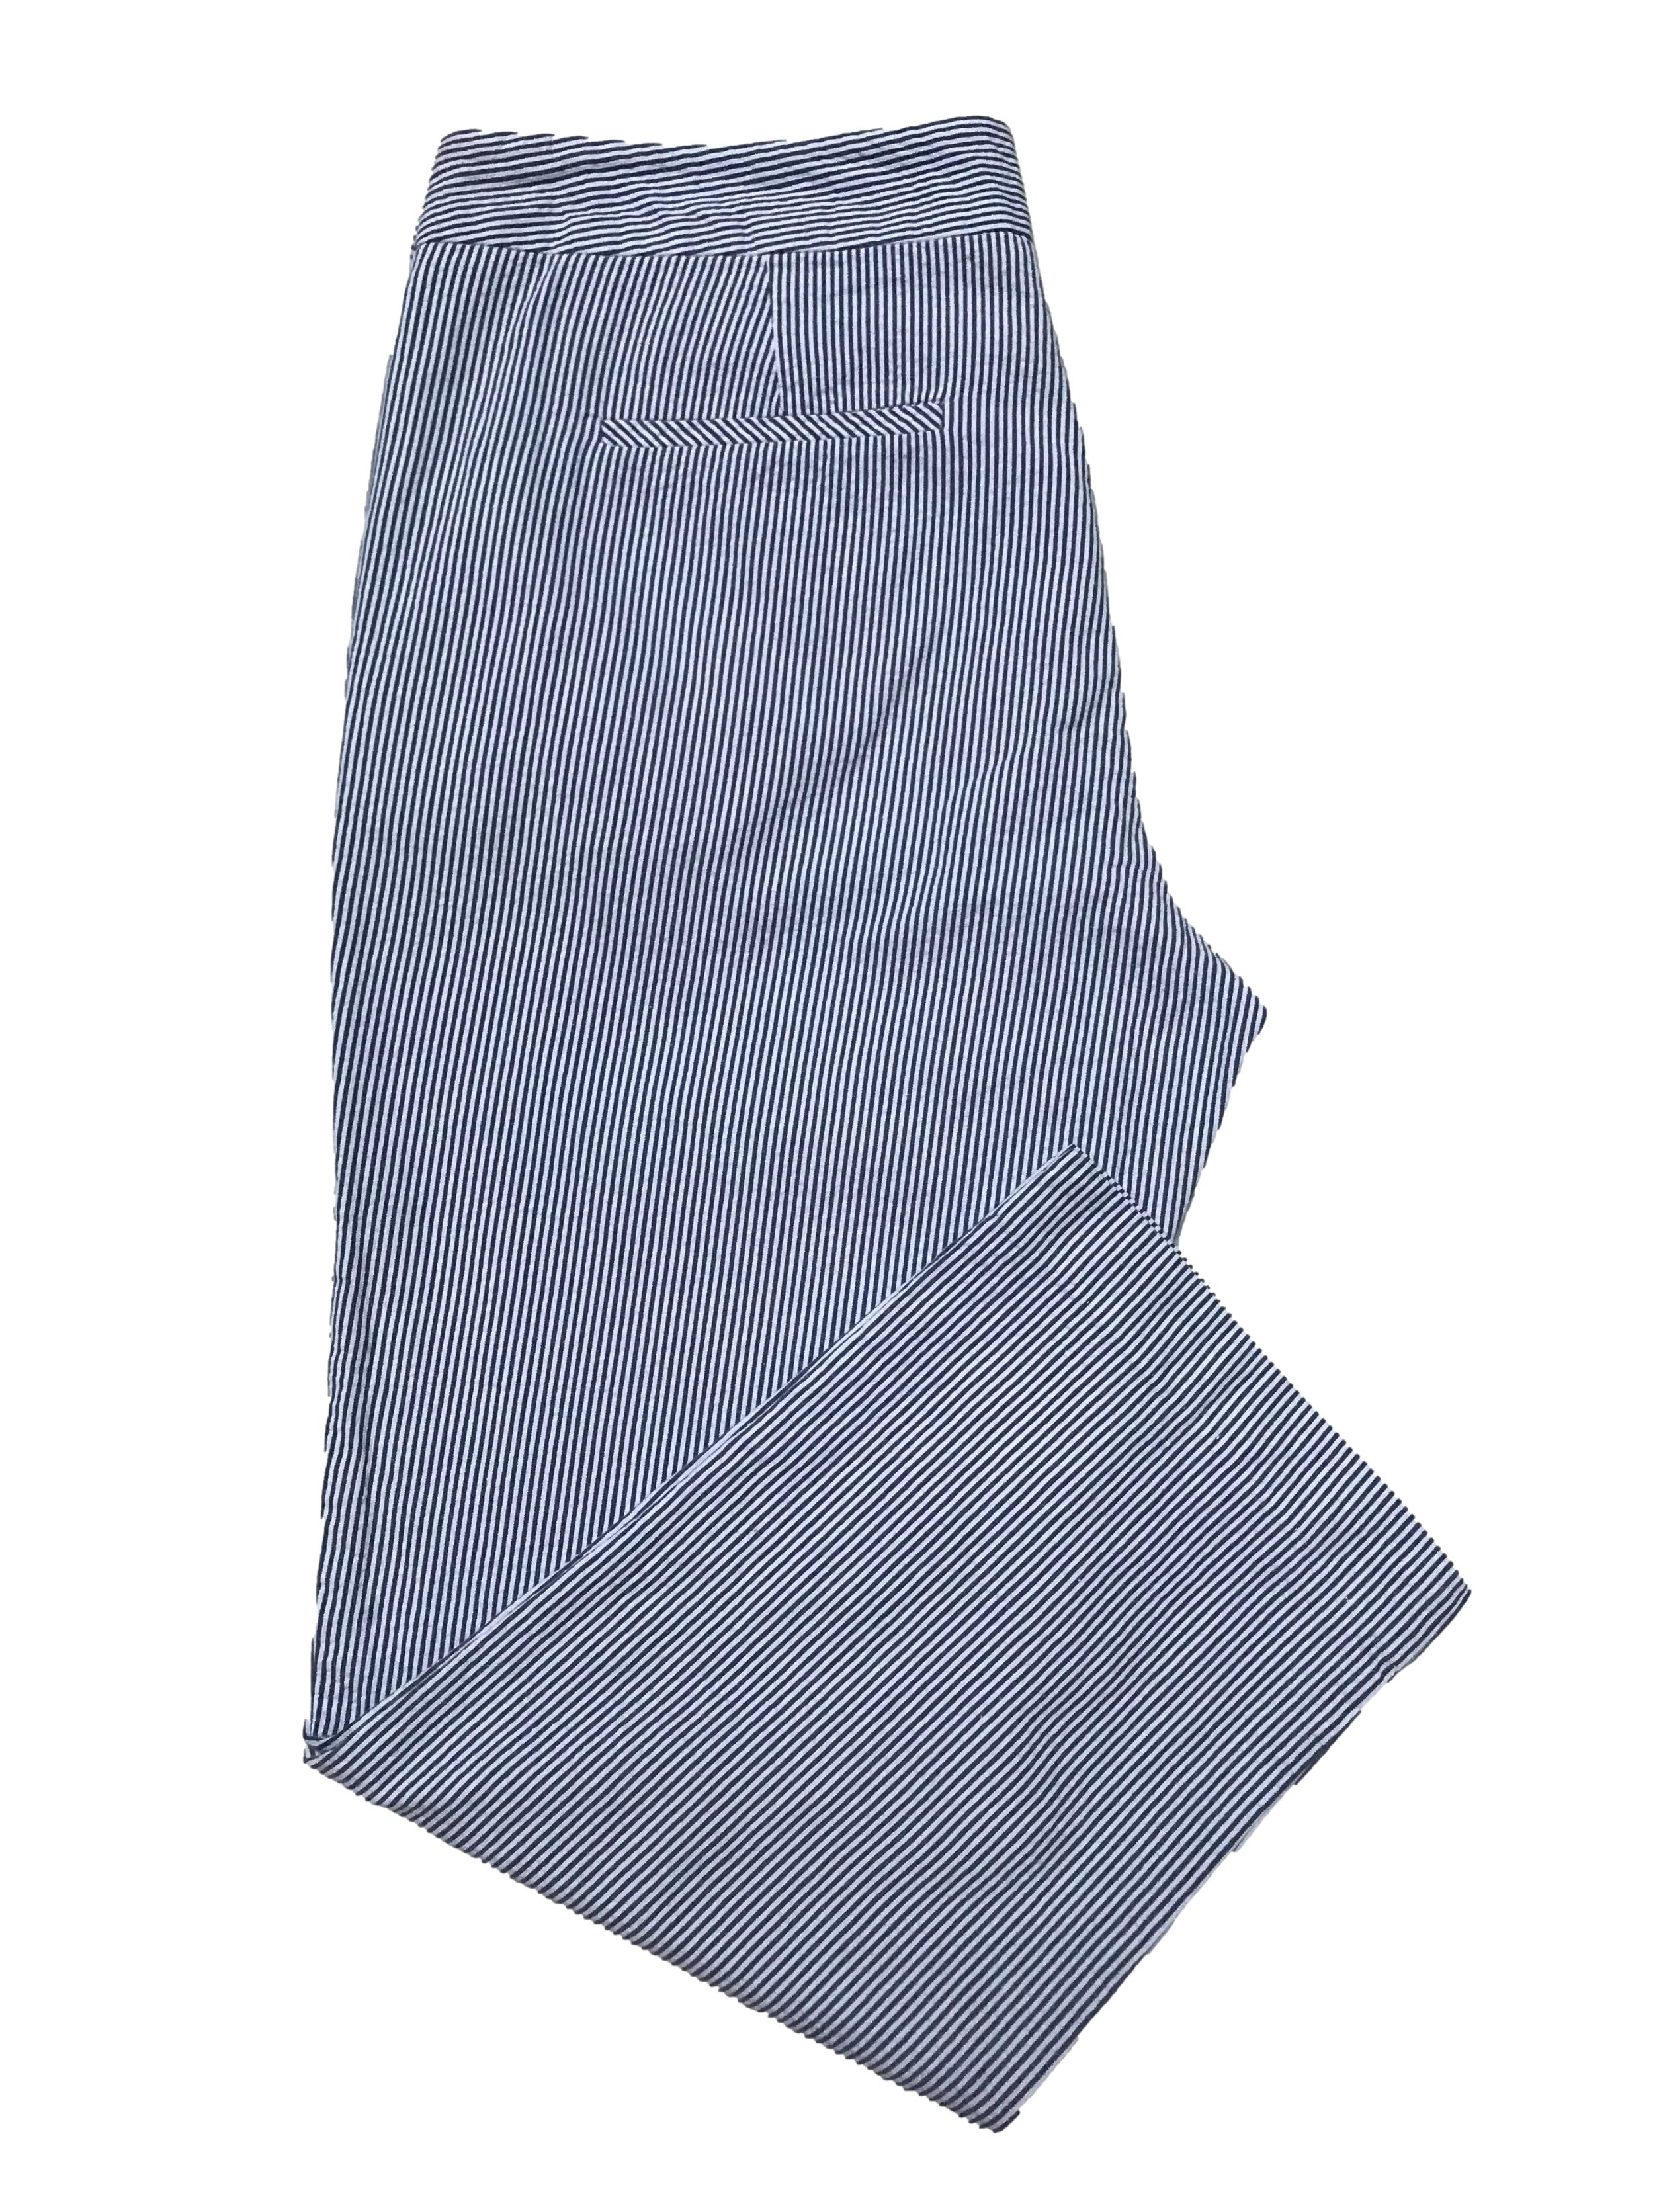 Pantalón al tobillo British Khaki a rayas blanca y azules 100% algodón, tiro medio, con bolsillos laterales. Pretina 44cm Largo 86cm